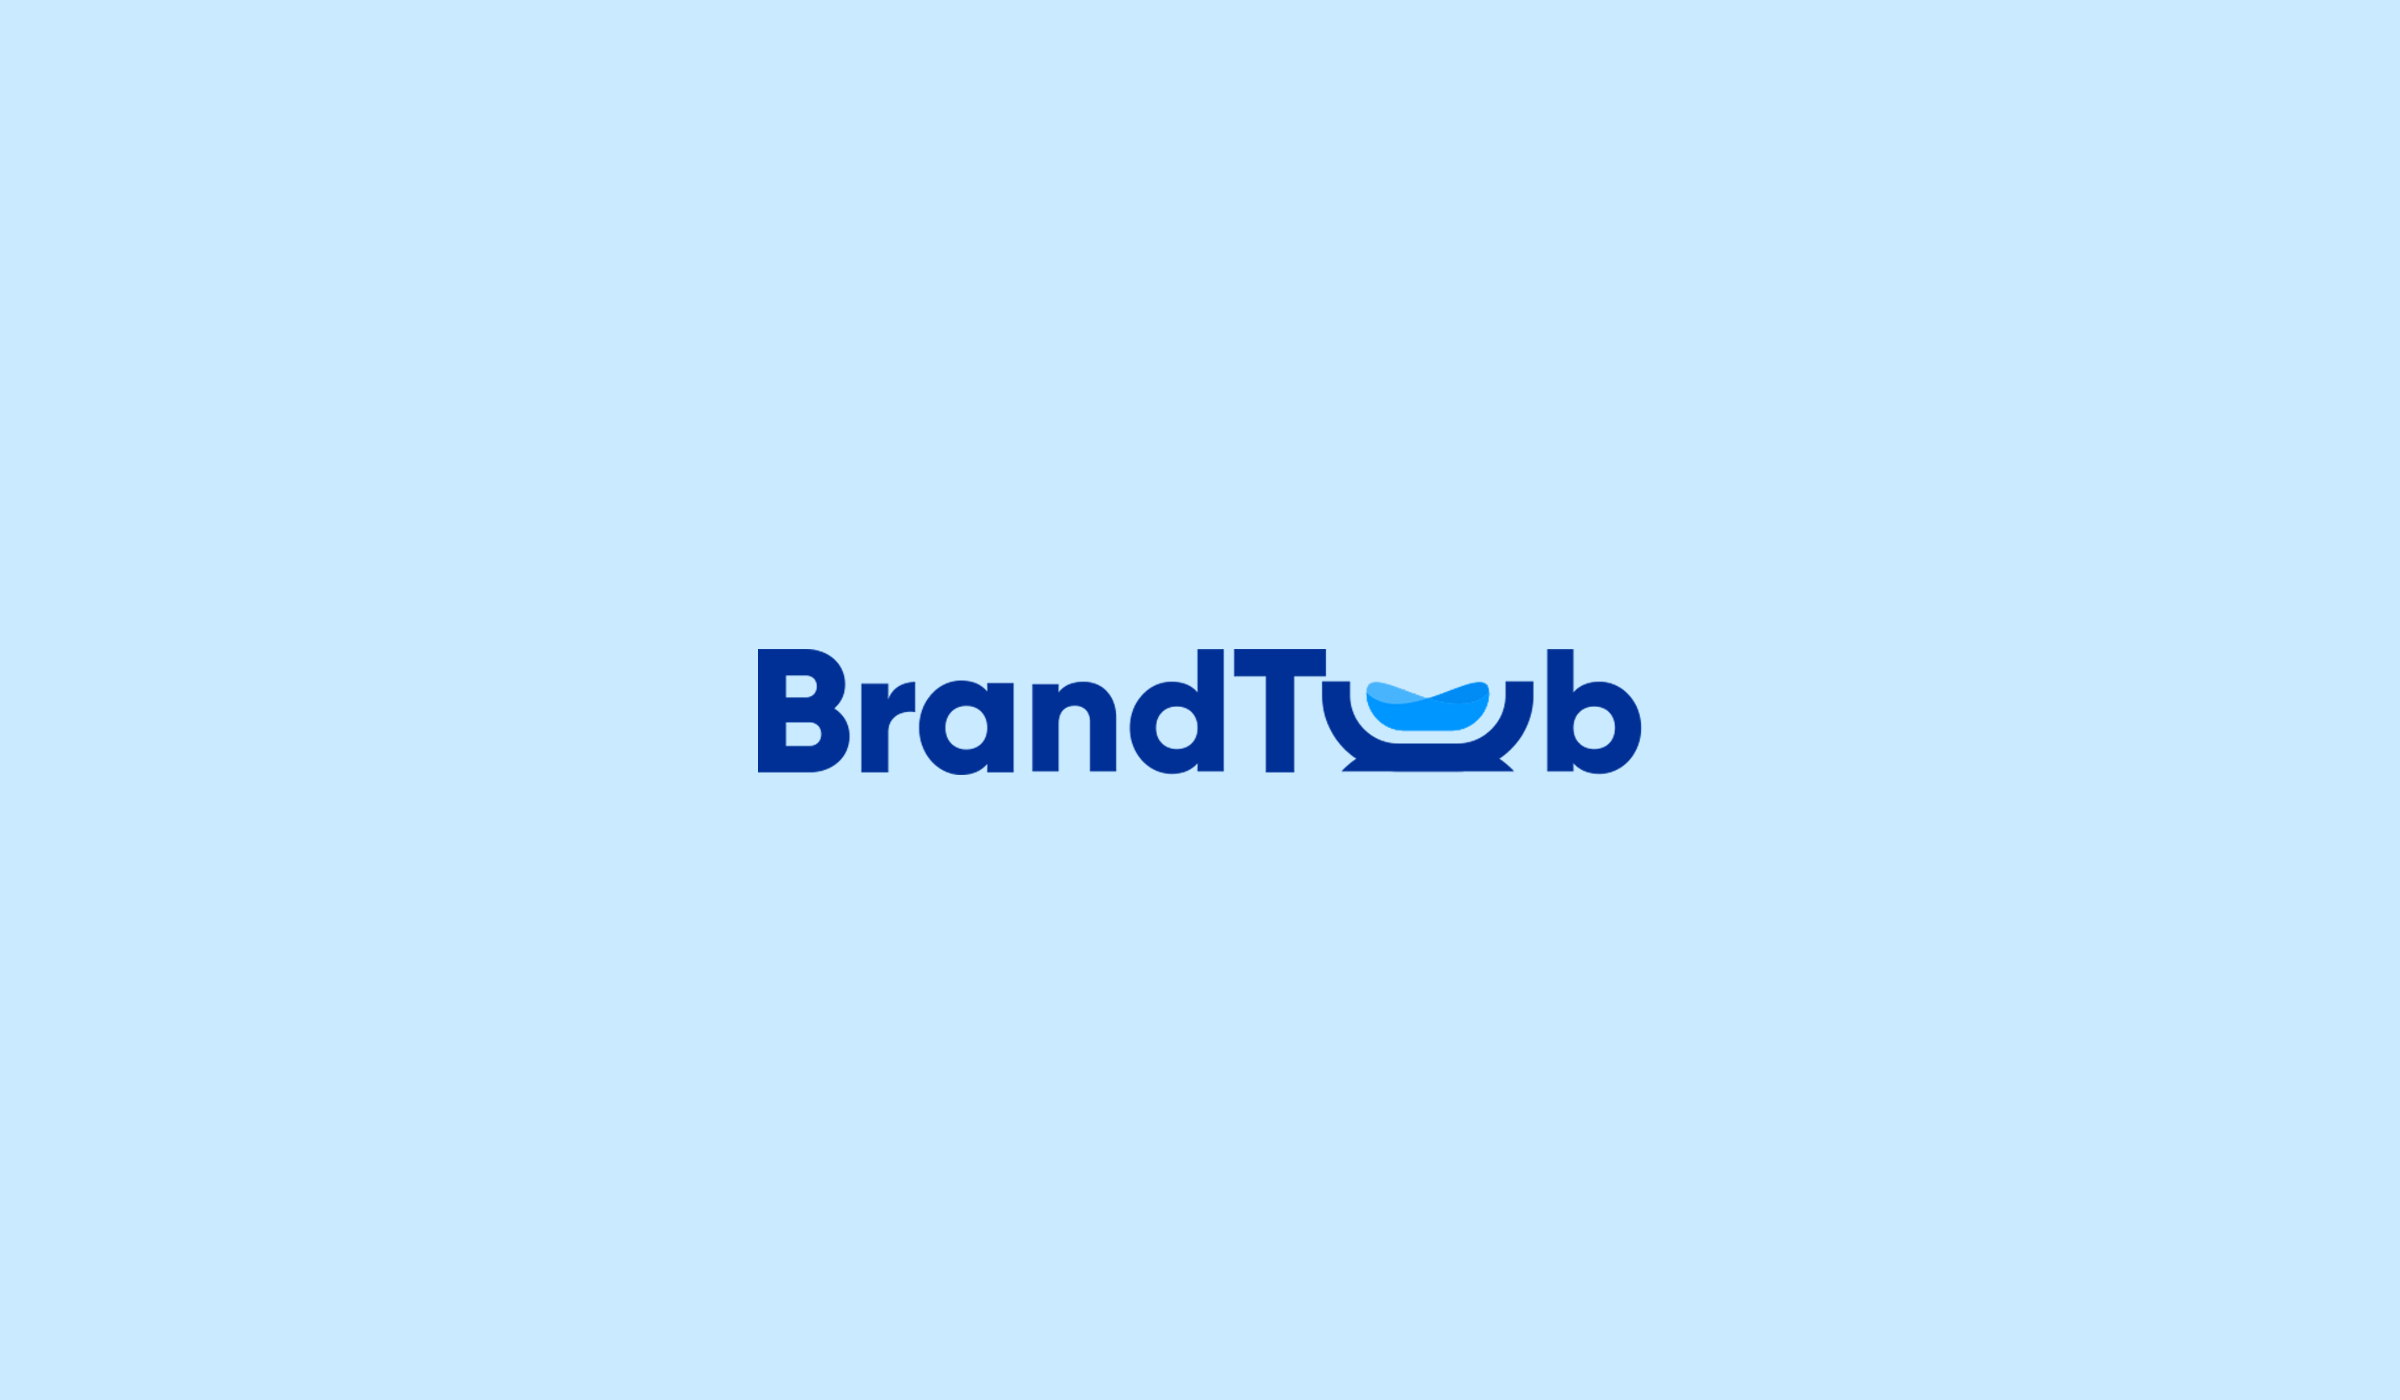 brandtub.com + web